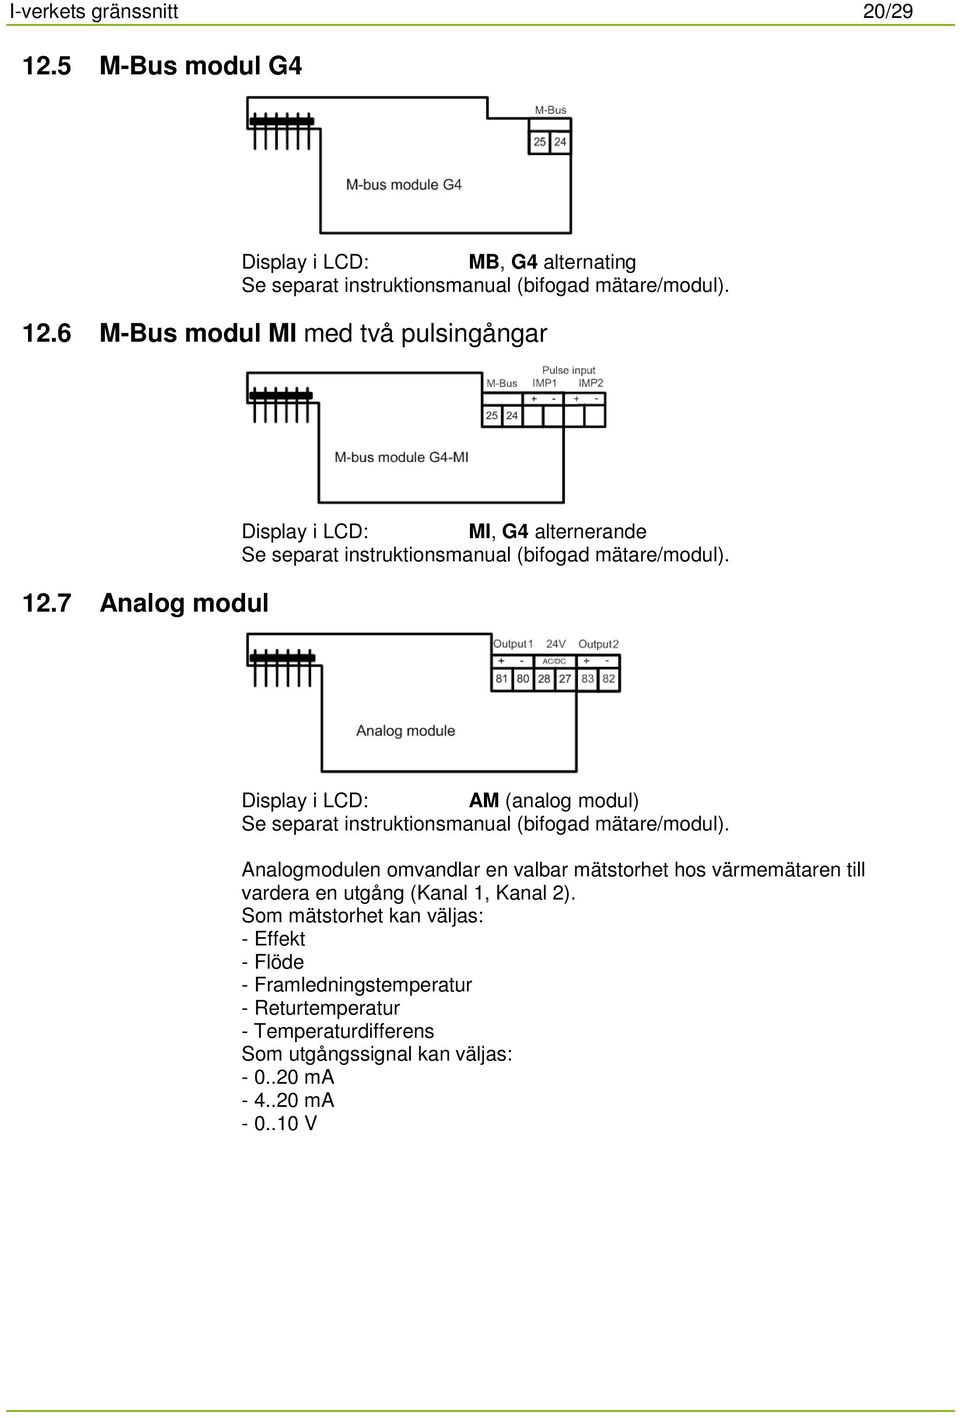 Display i LCD: AM (analog modul) Se separat instruktionsmanual (bifogad mätare/modul).